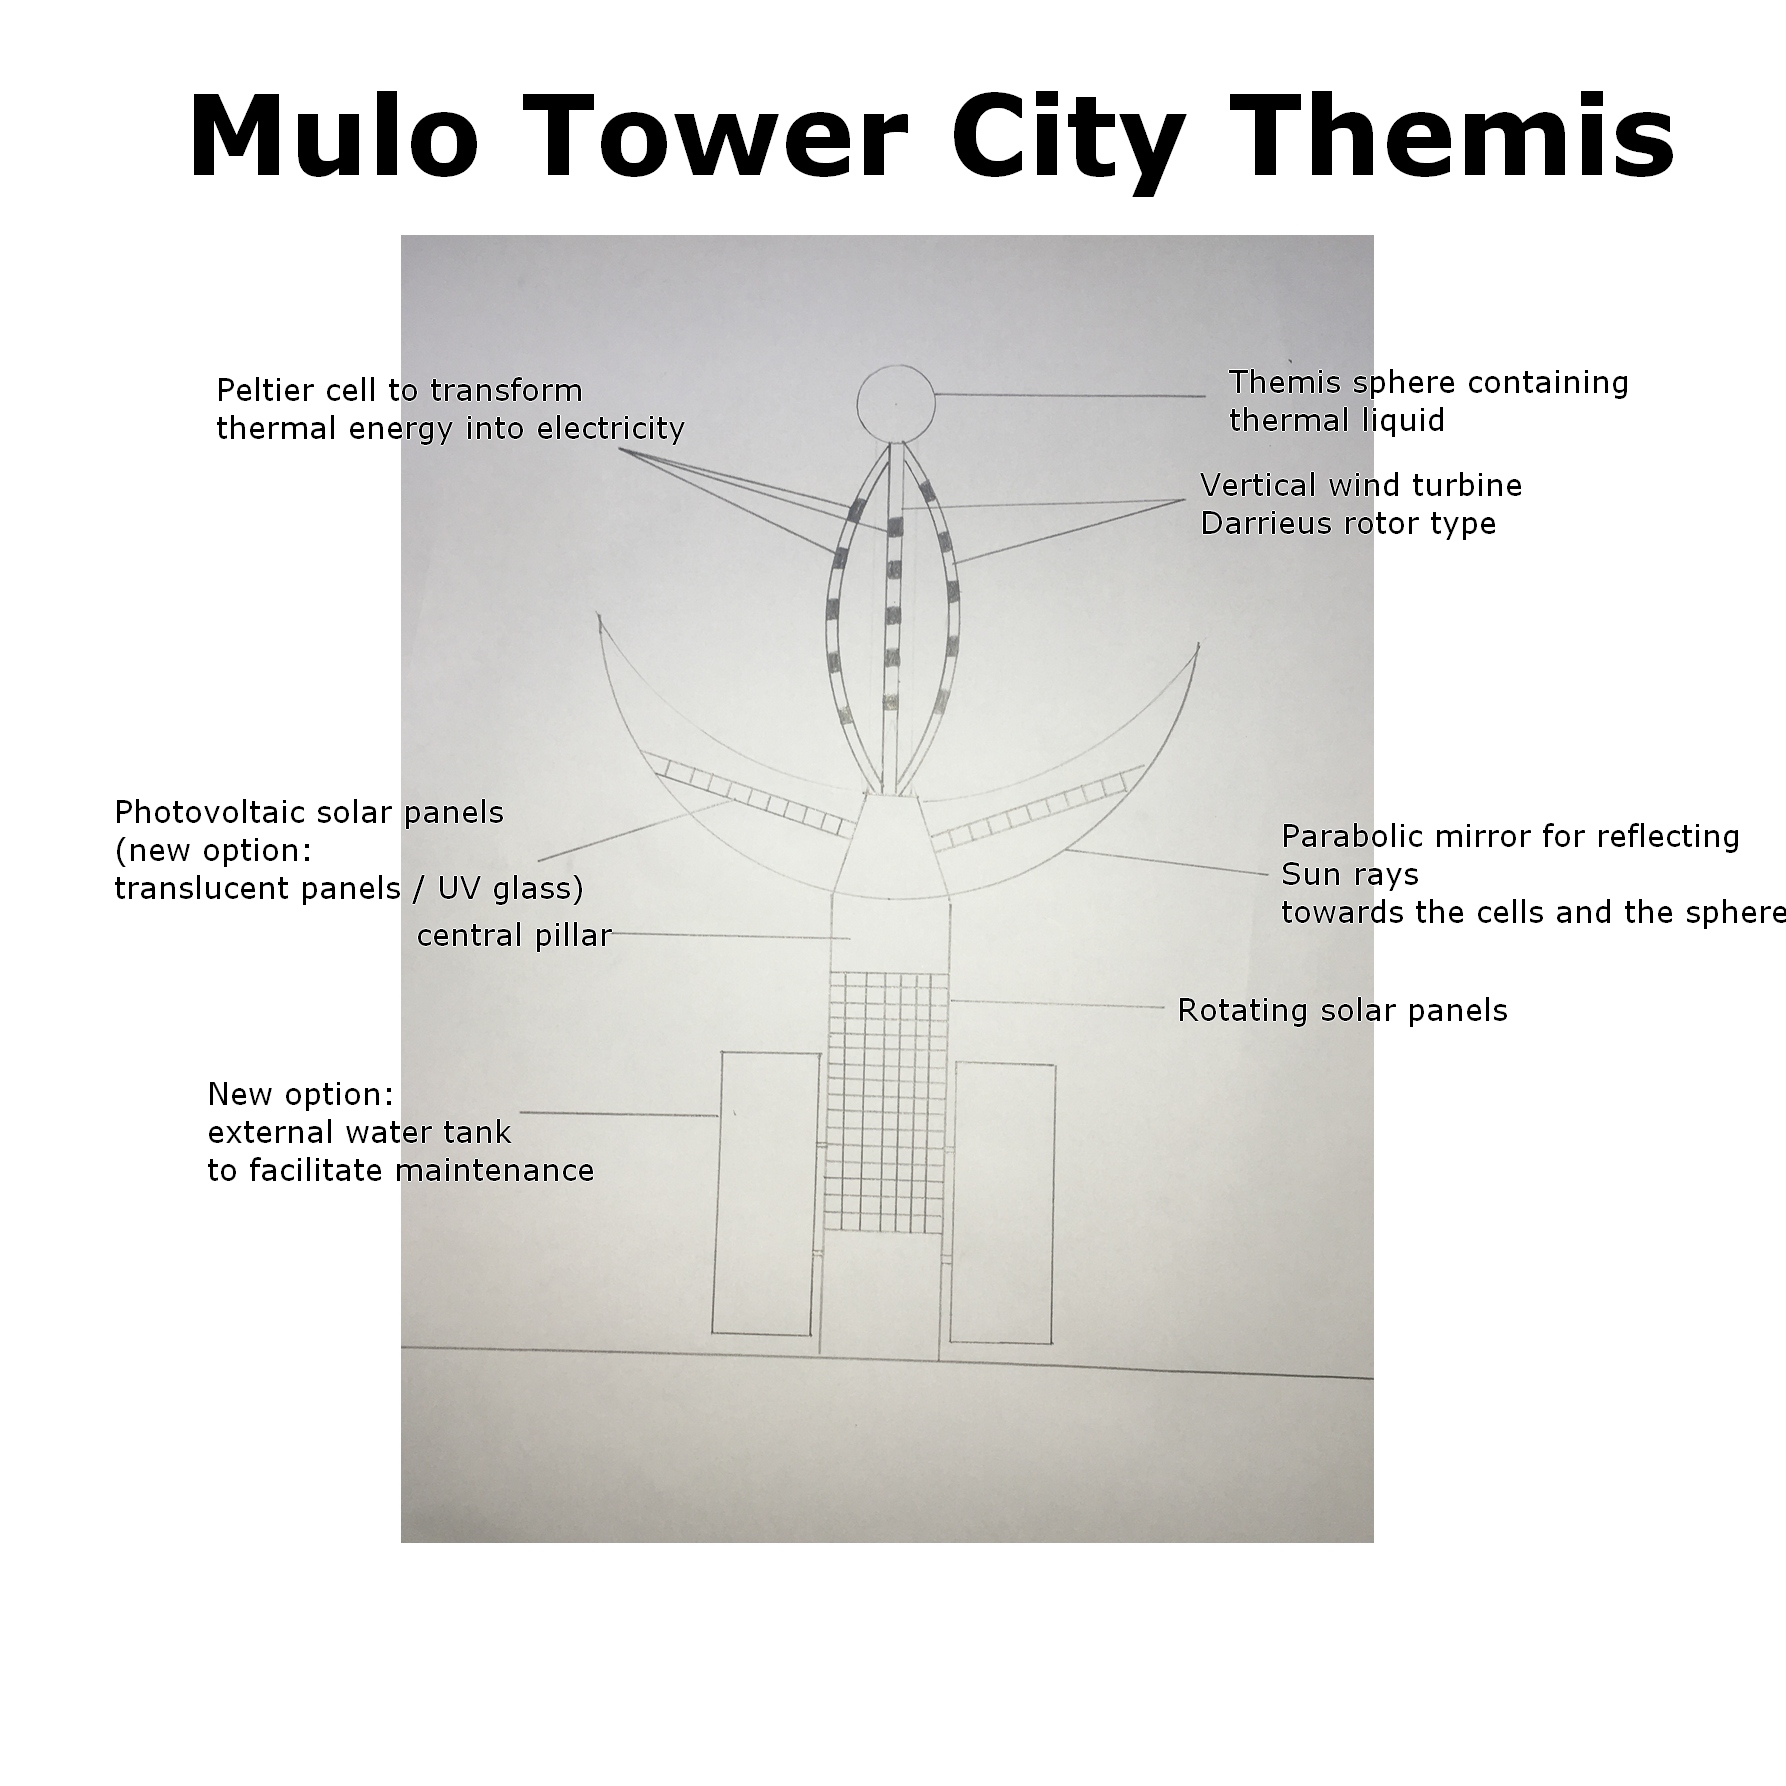 The Mulo Tower City Themis